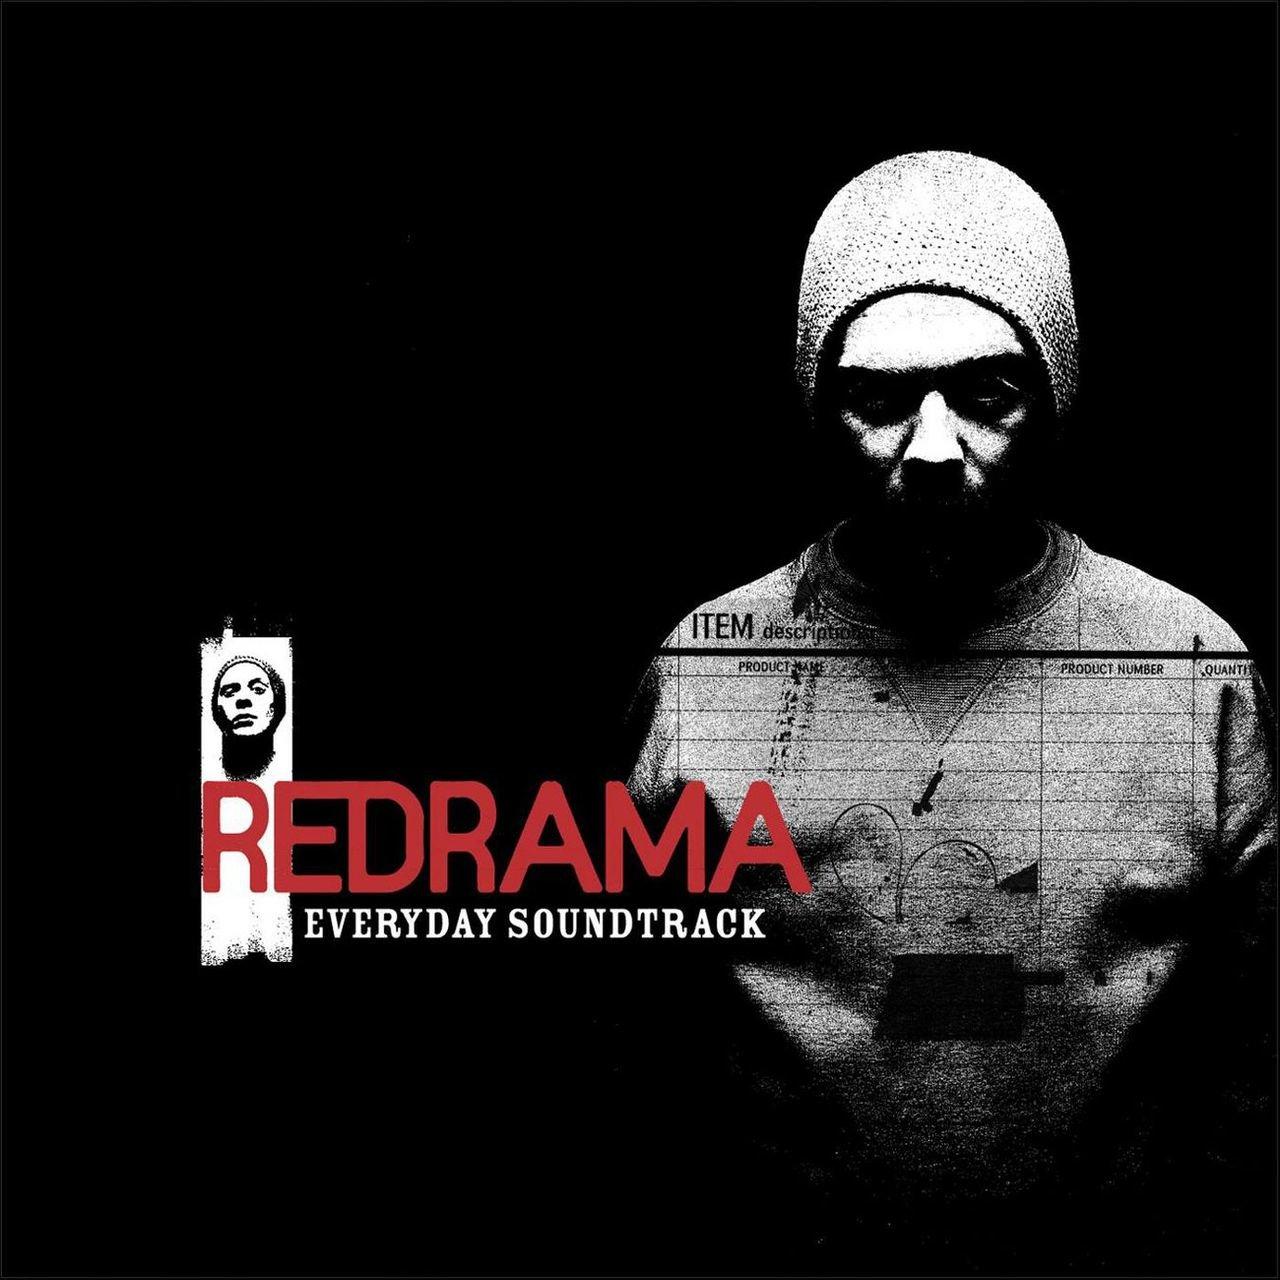 Redrama – Everyday Soundtrack